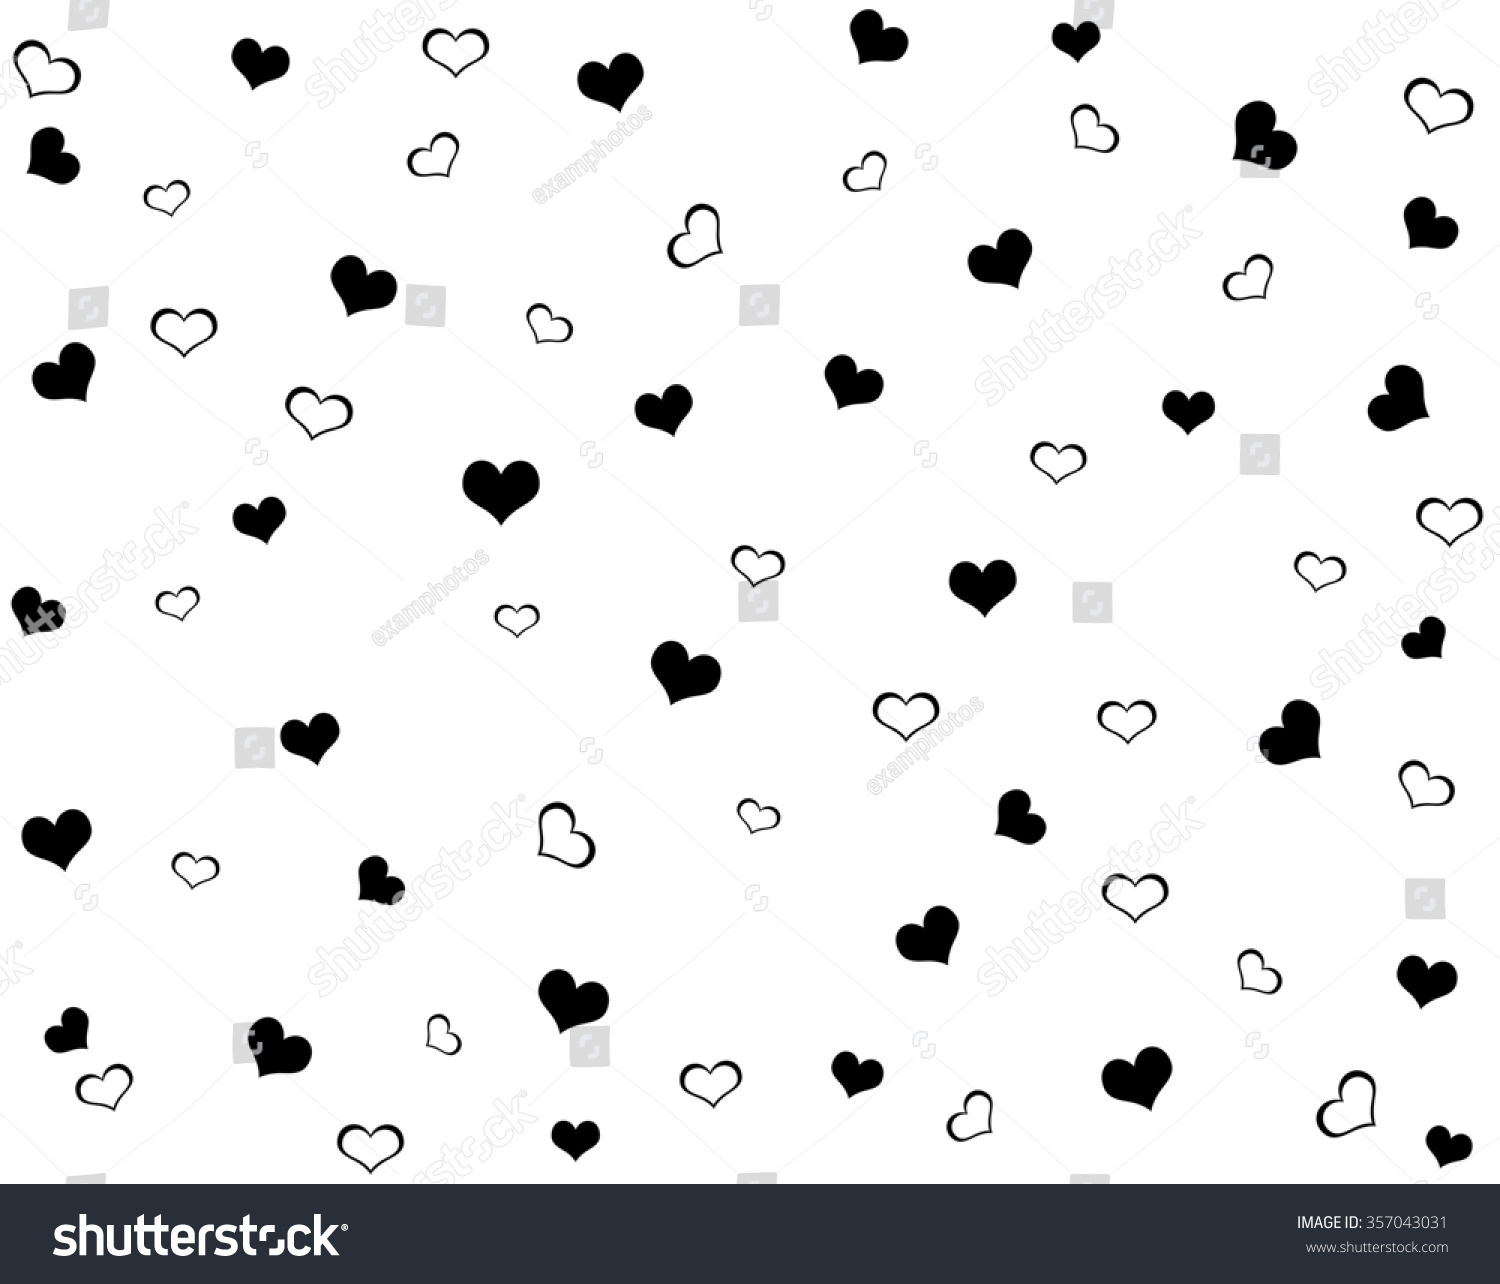 [64+] Black And White Hearts Background | WallpaperSafari.com